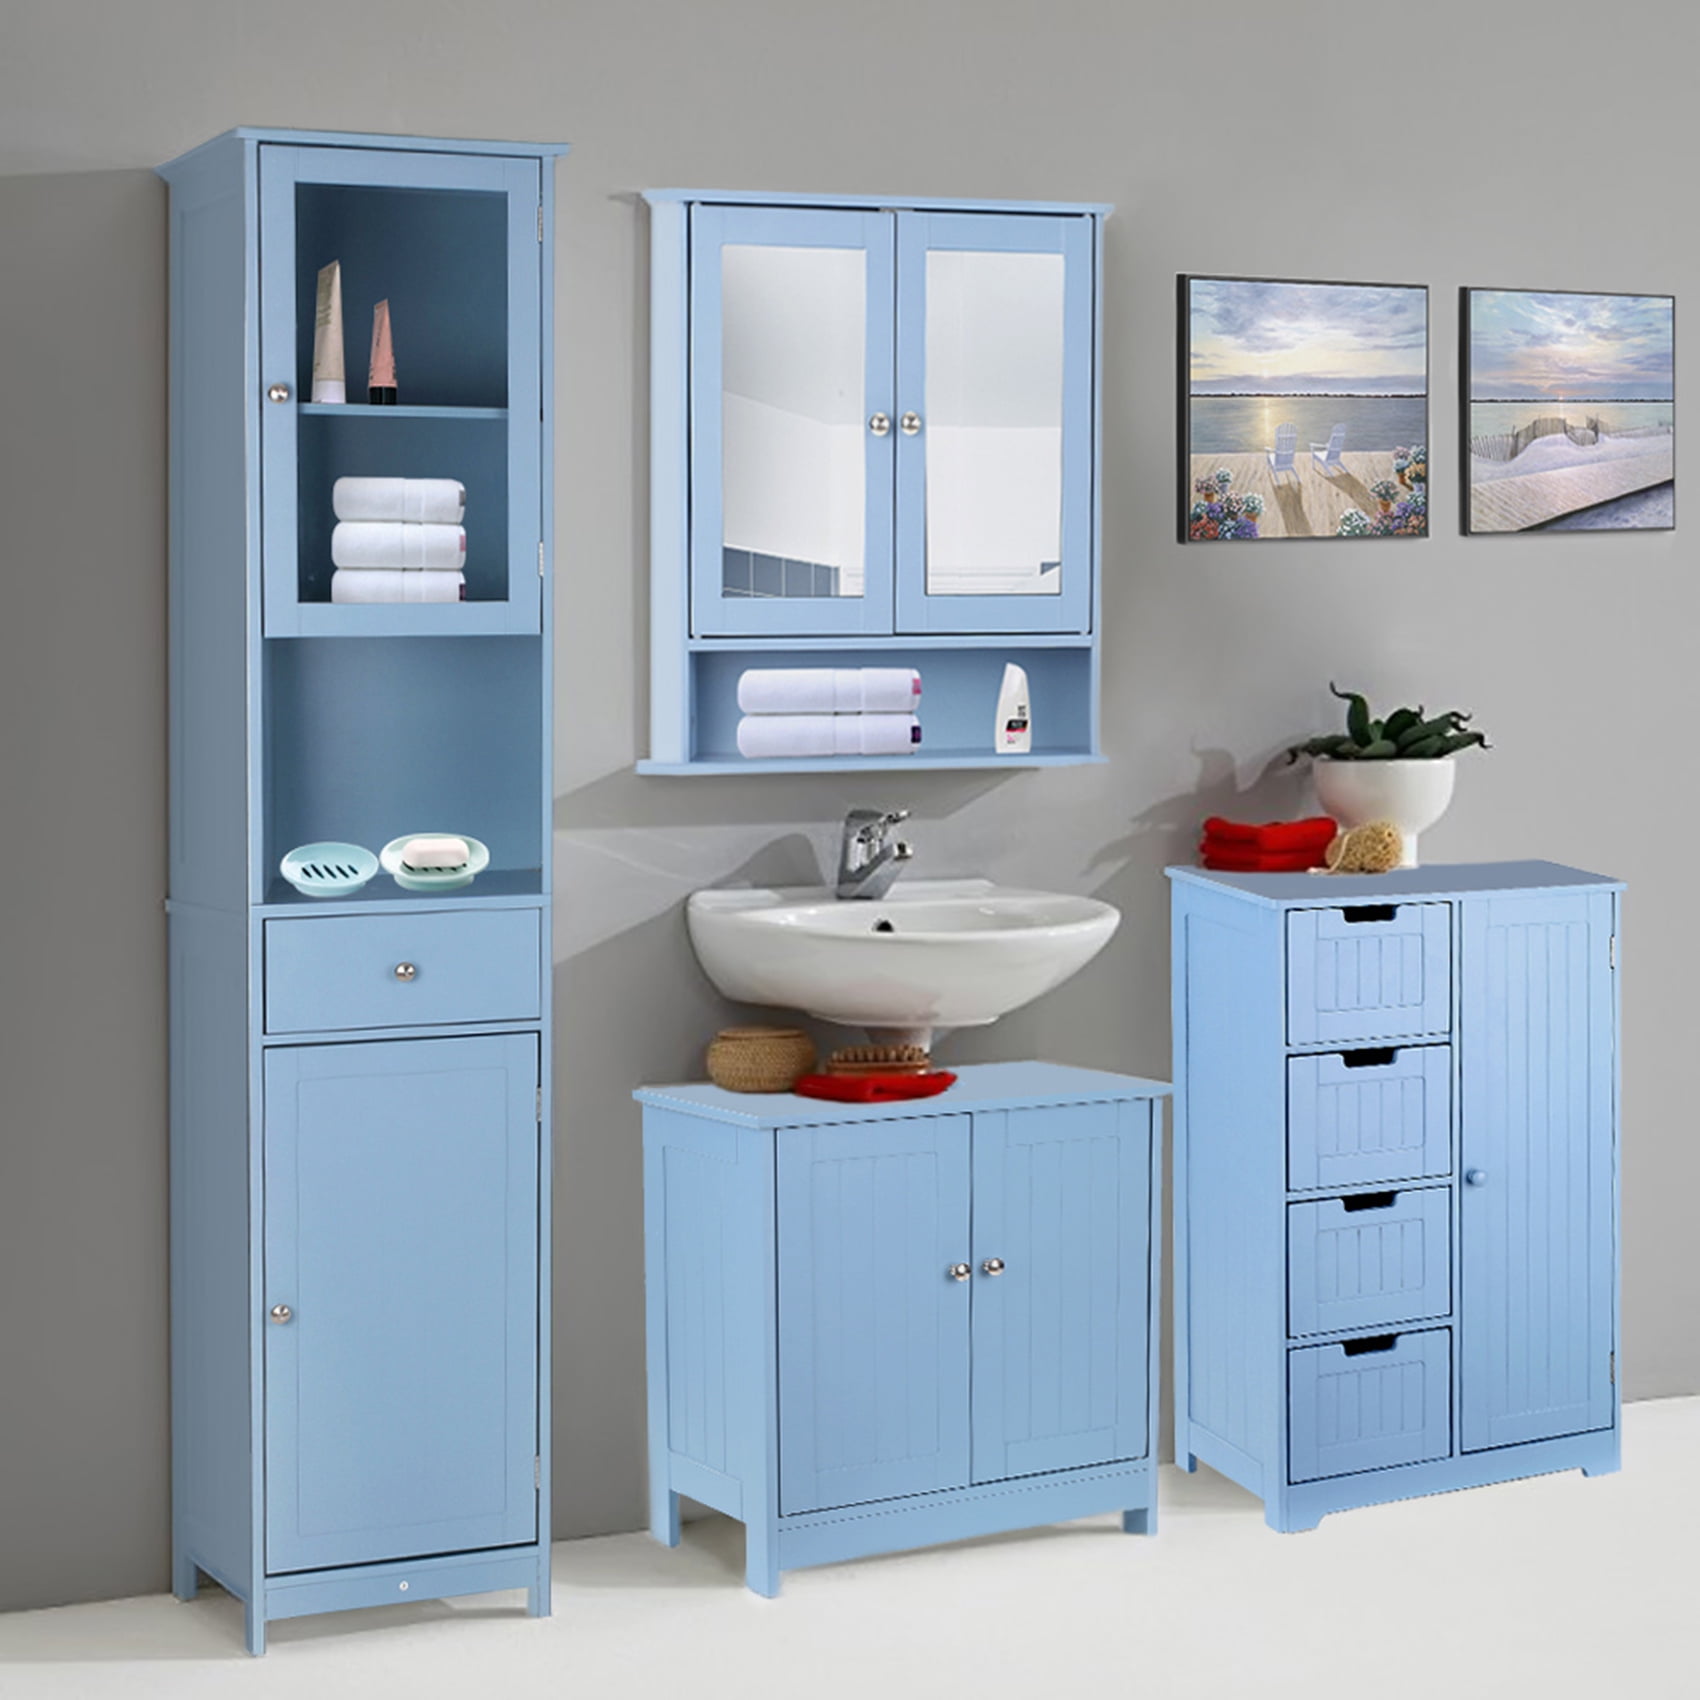 IKayaa Modern Under Sink Storage Cabinet With Bathroom Vanity Furniture US Ship 